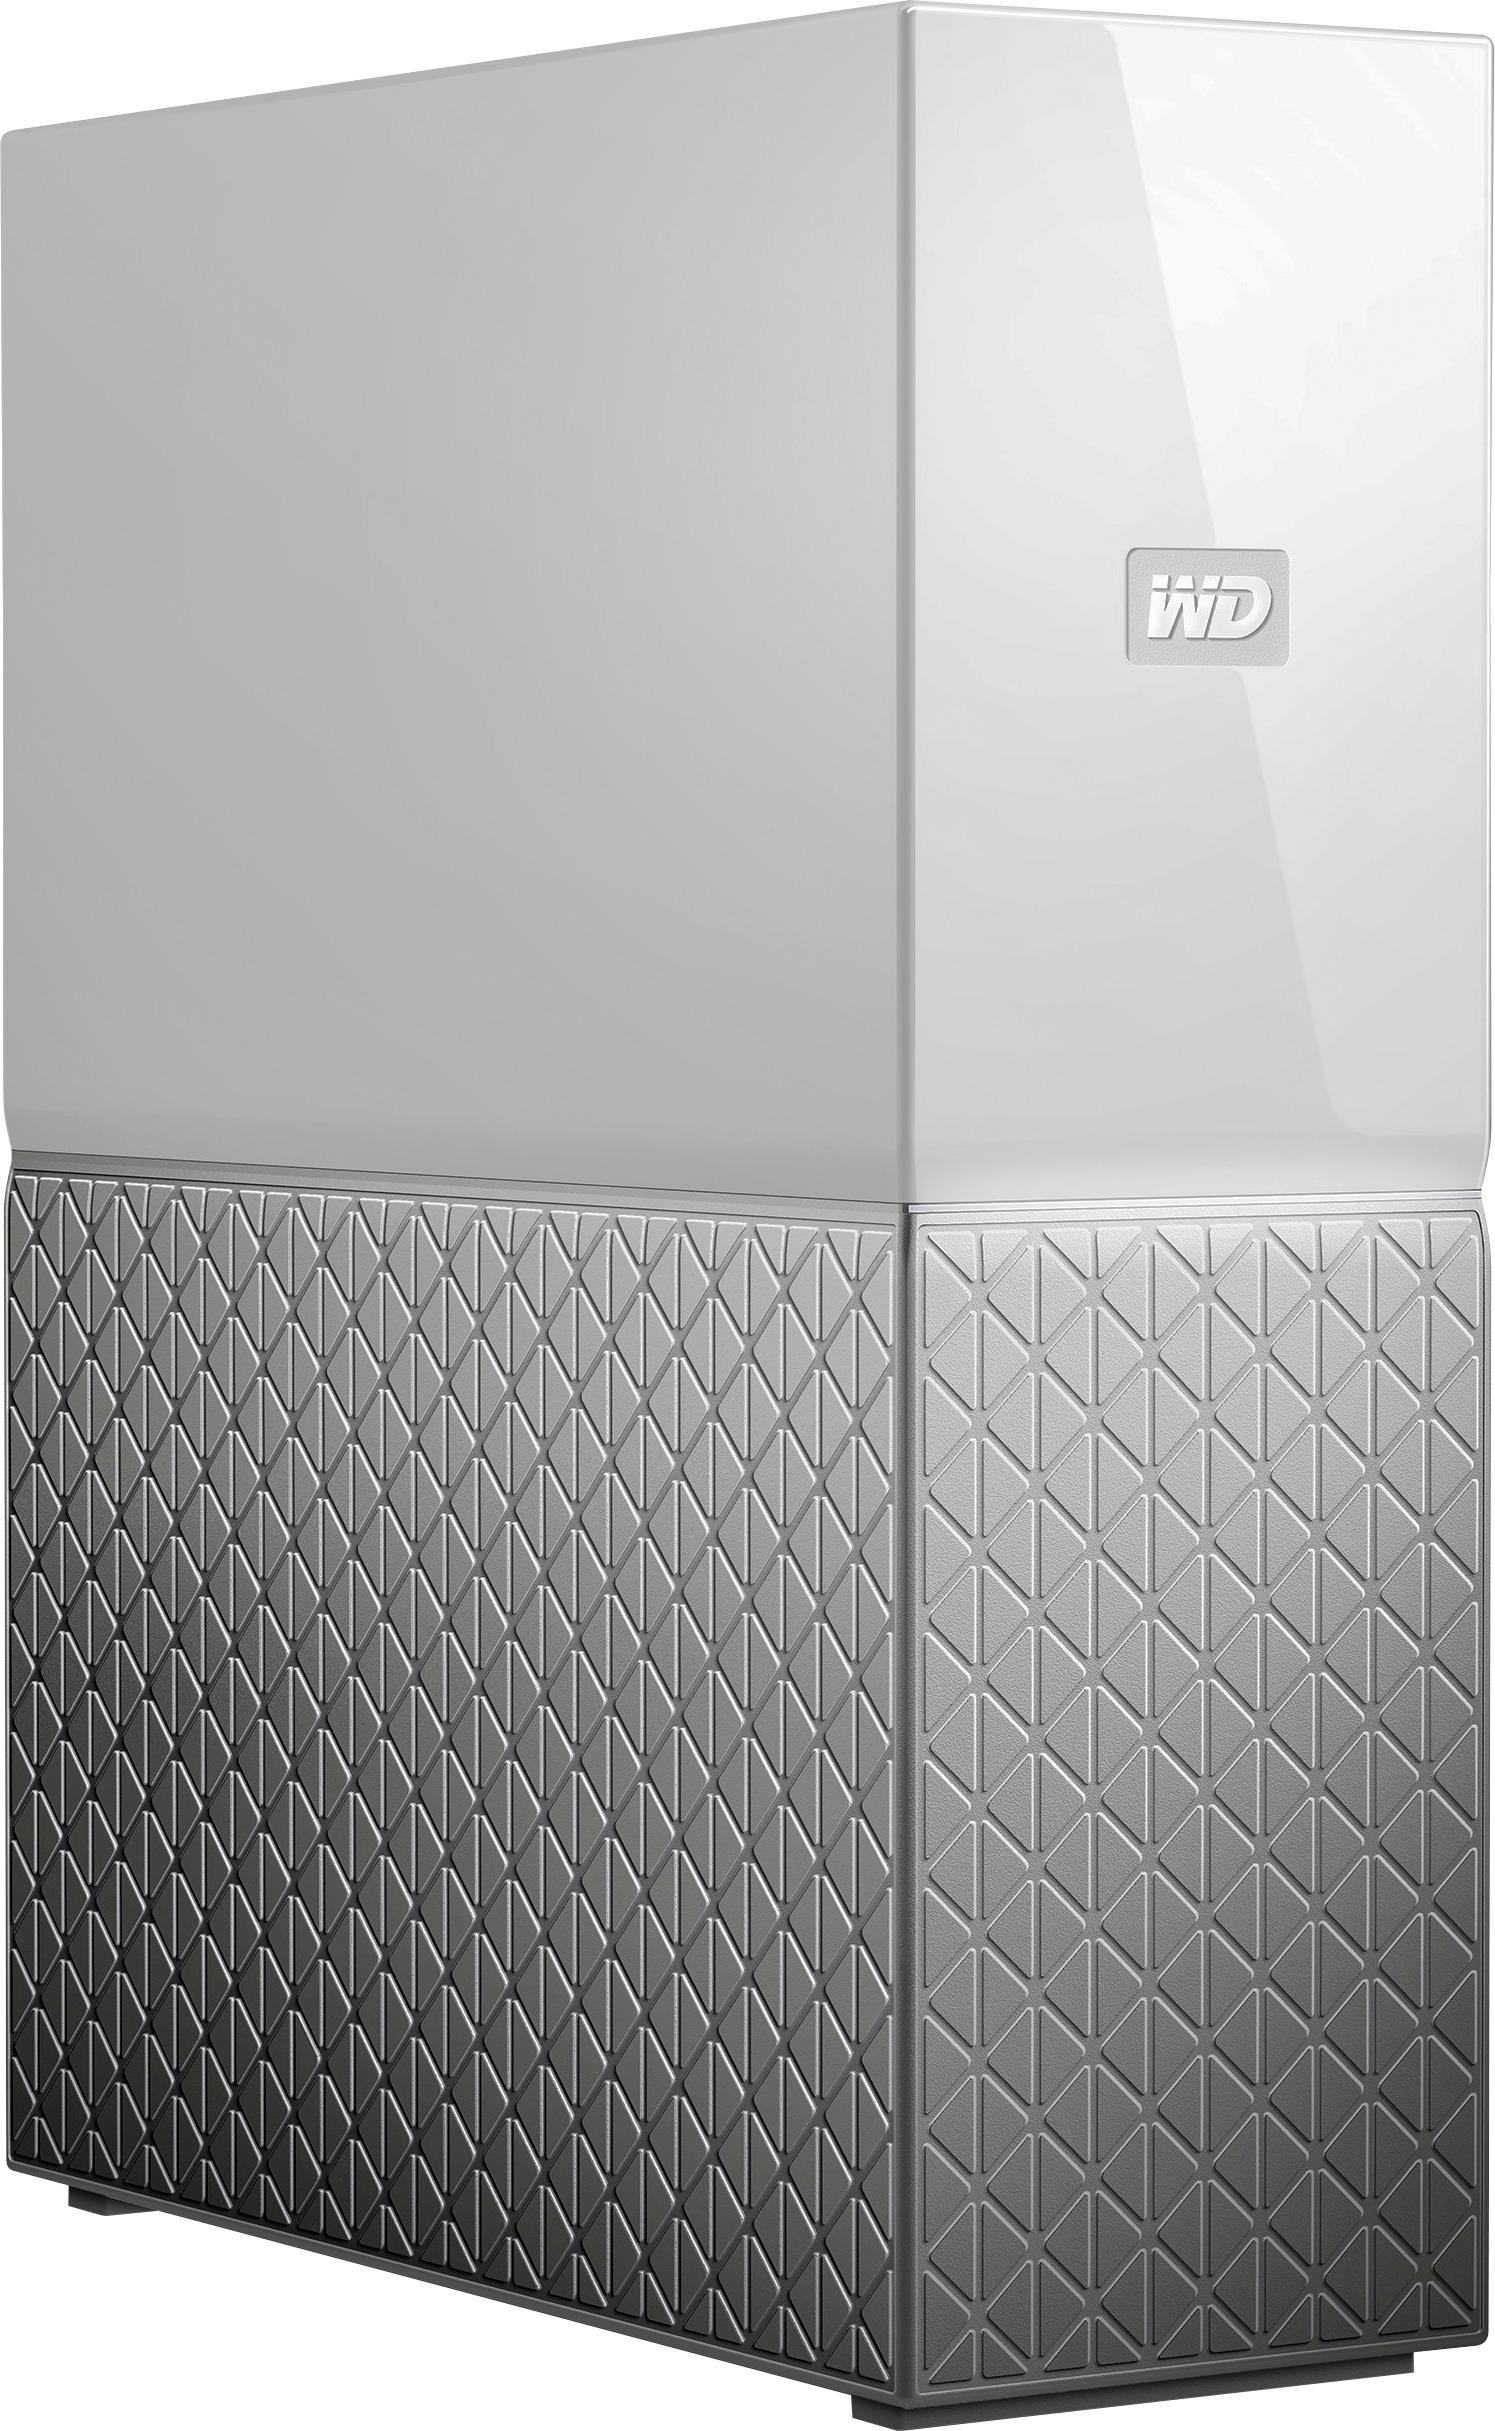 Left View: WD - Blue 500GB Internal SATA Hard Drive for Desktops